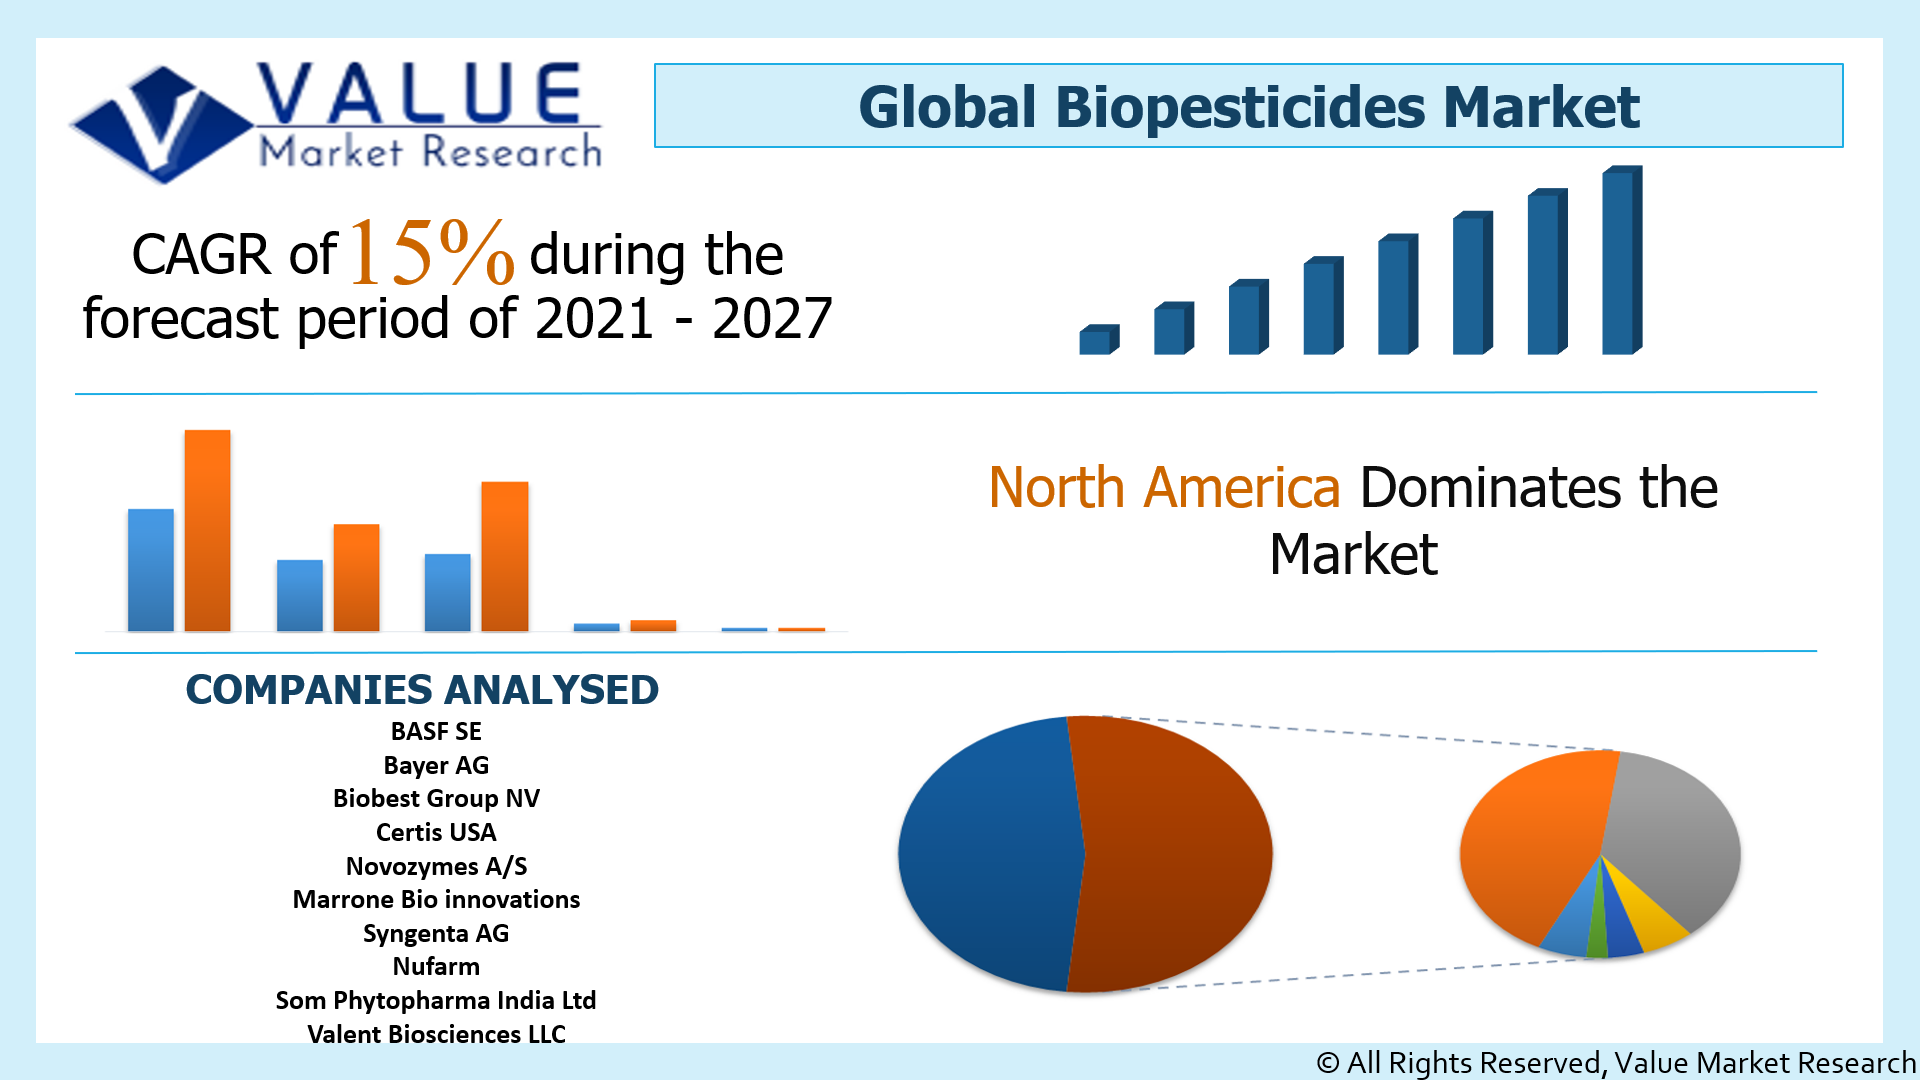 Global Biopesticides Market Share